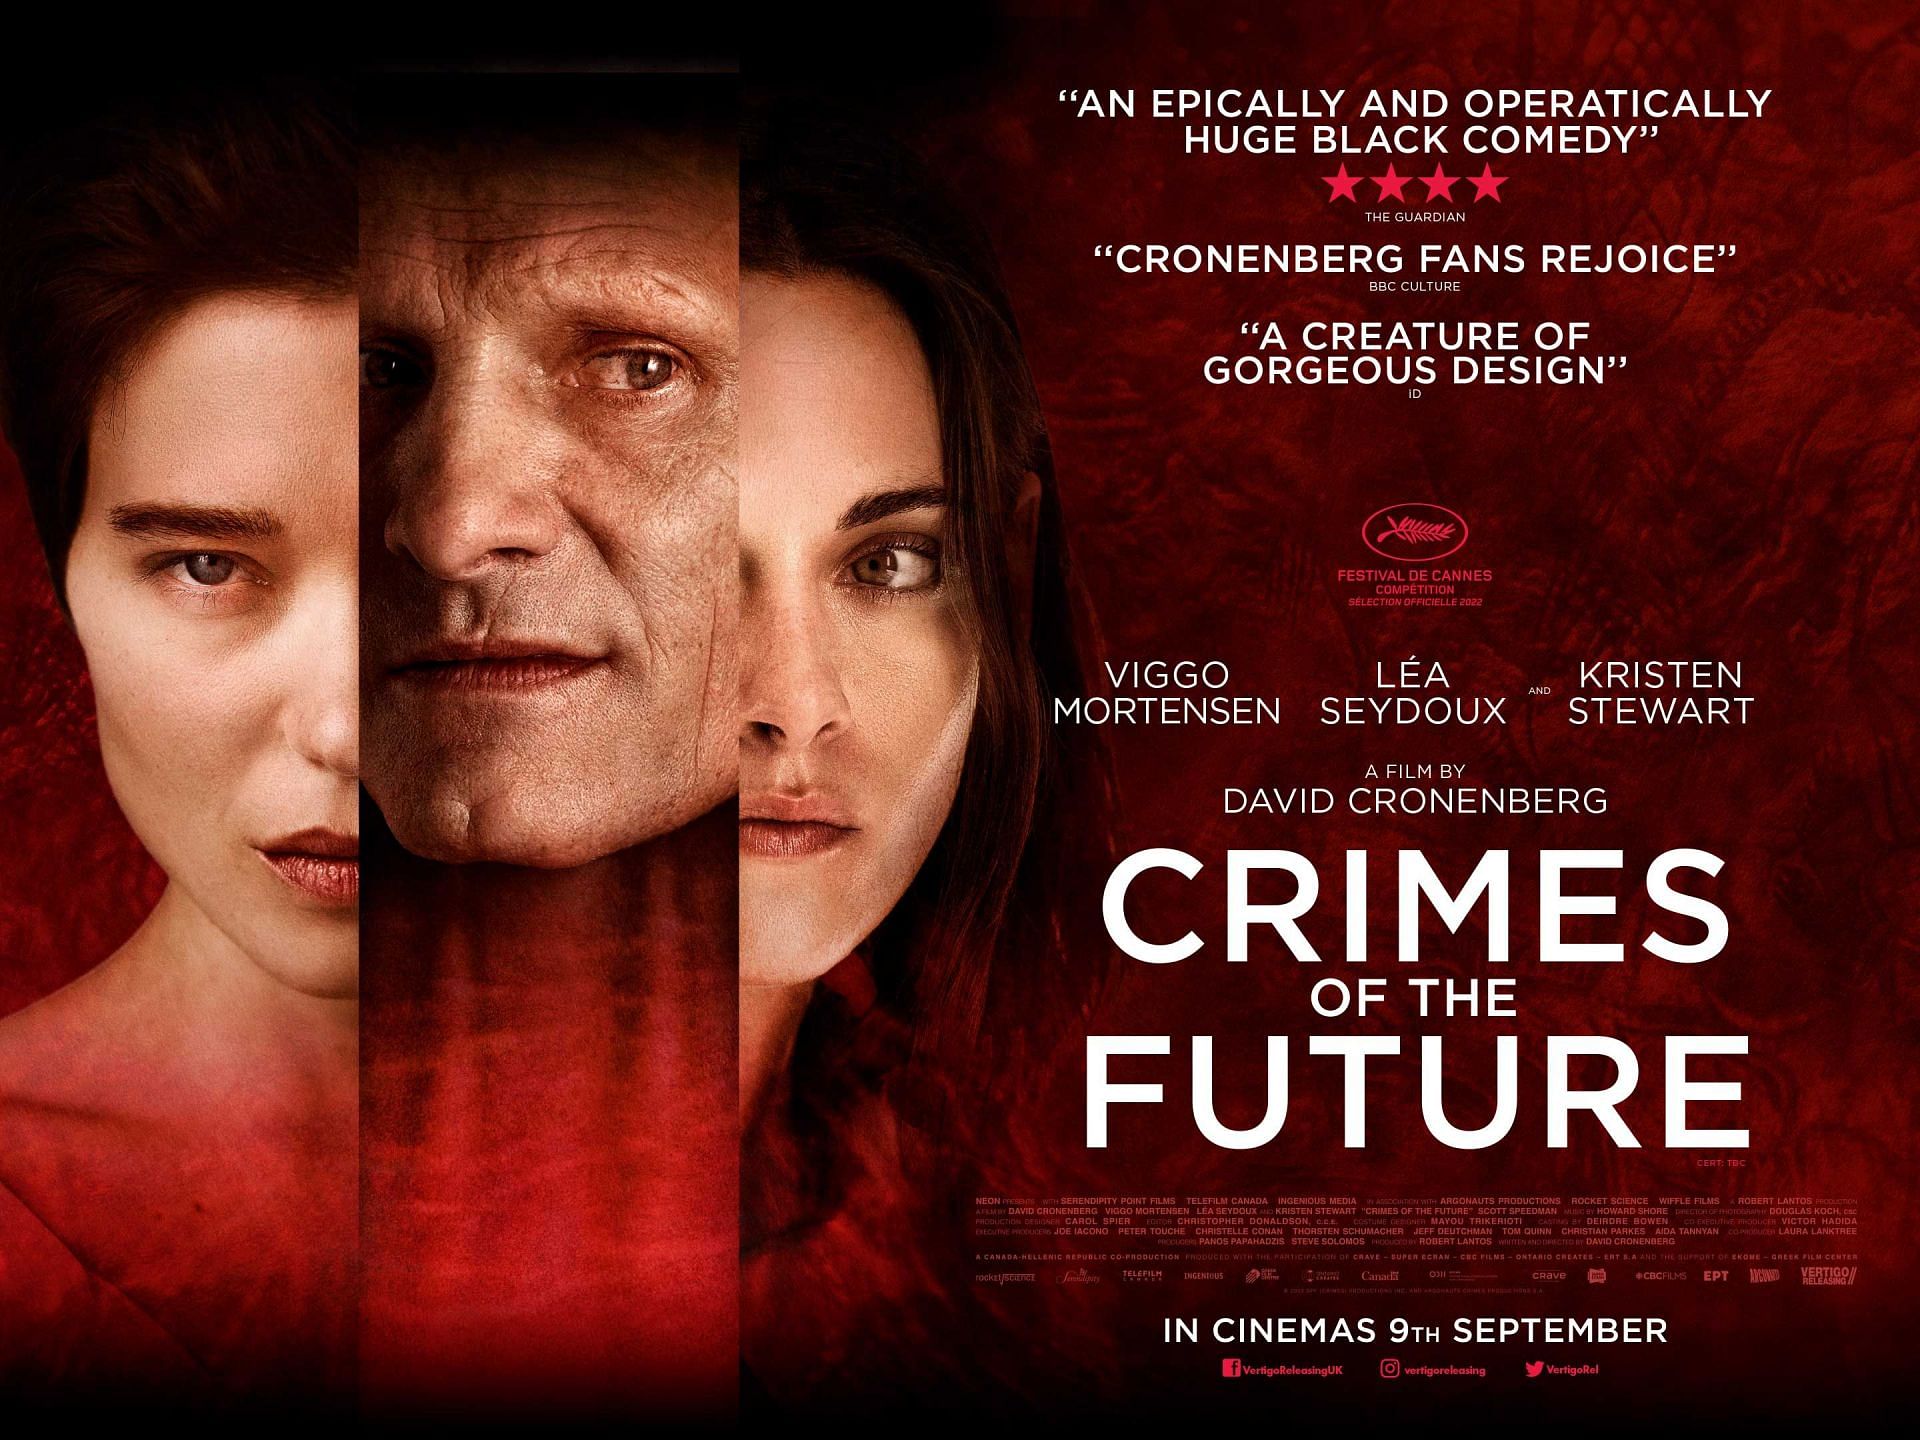 Crimes of the Future (Image via Sphere Films)